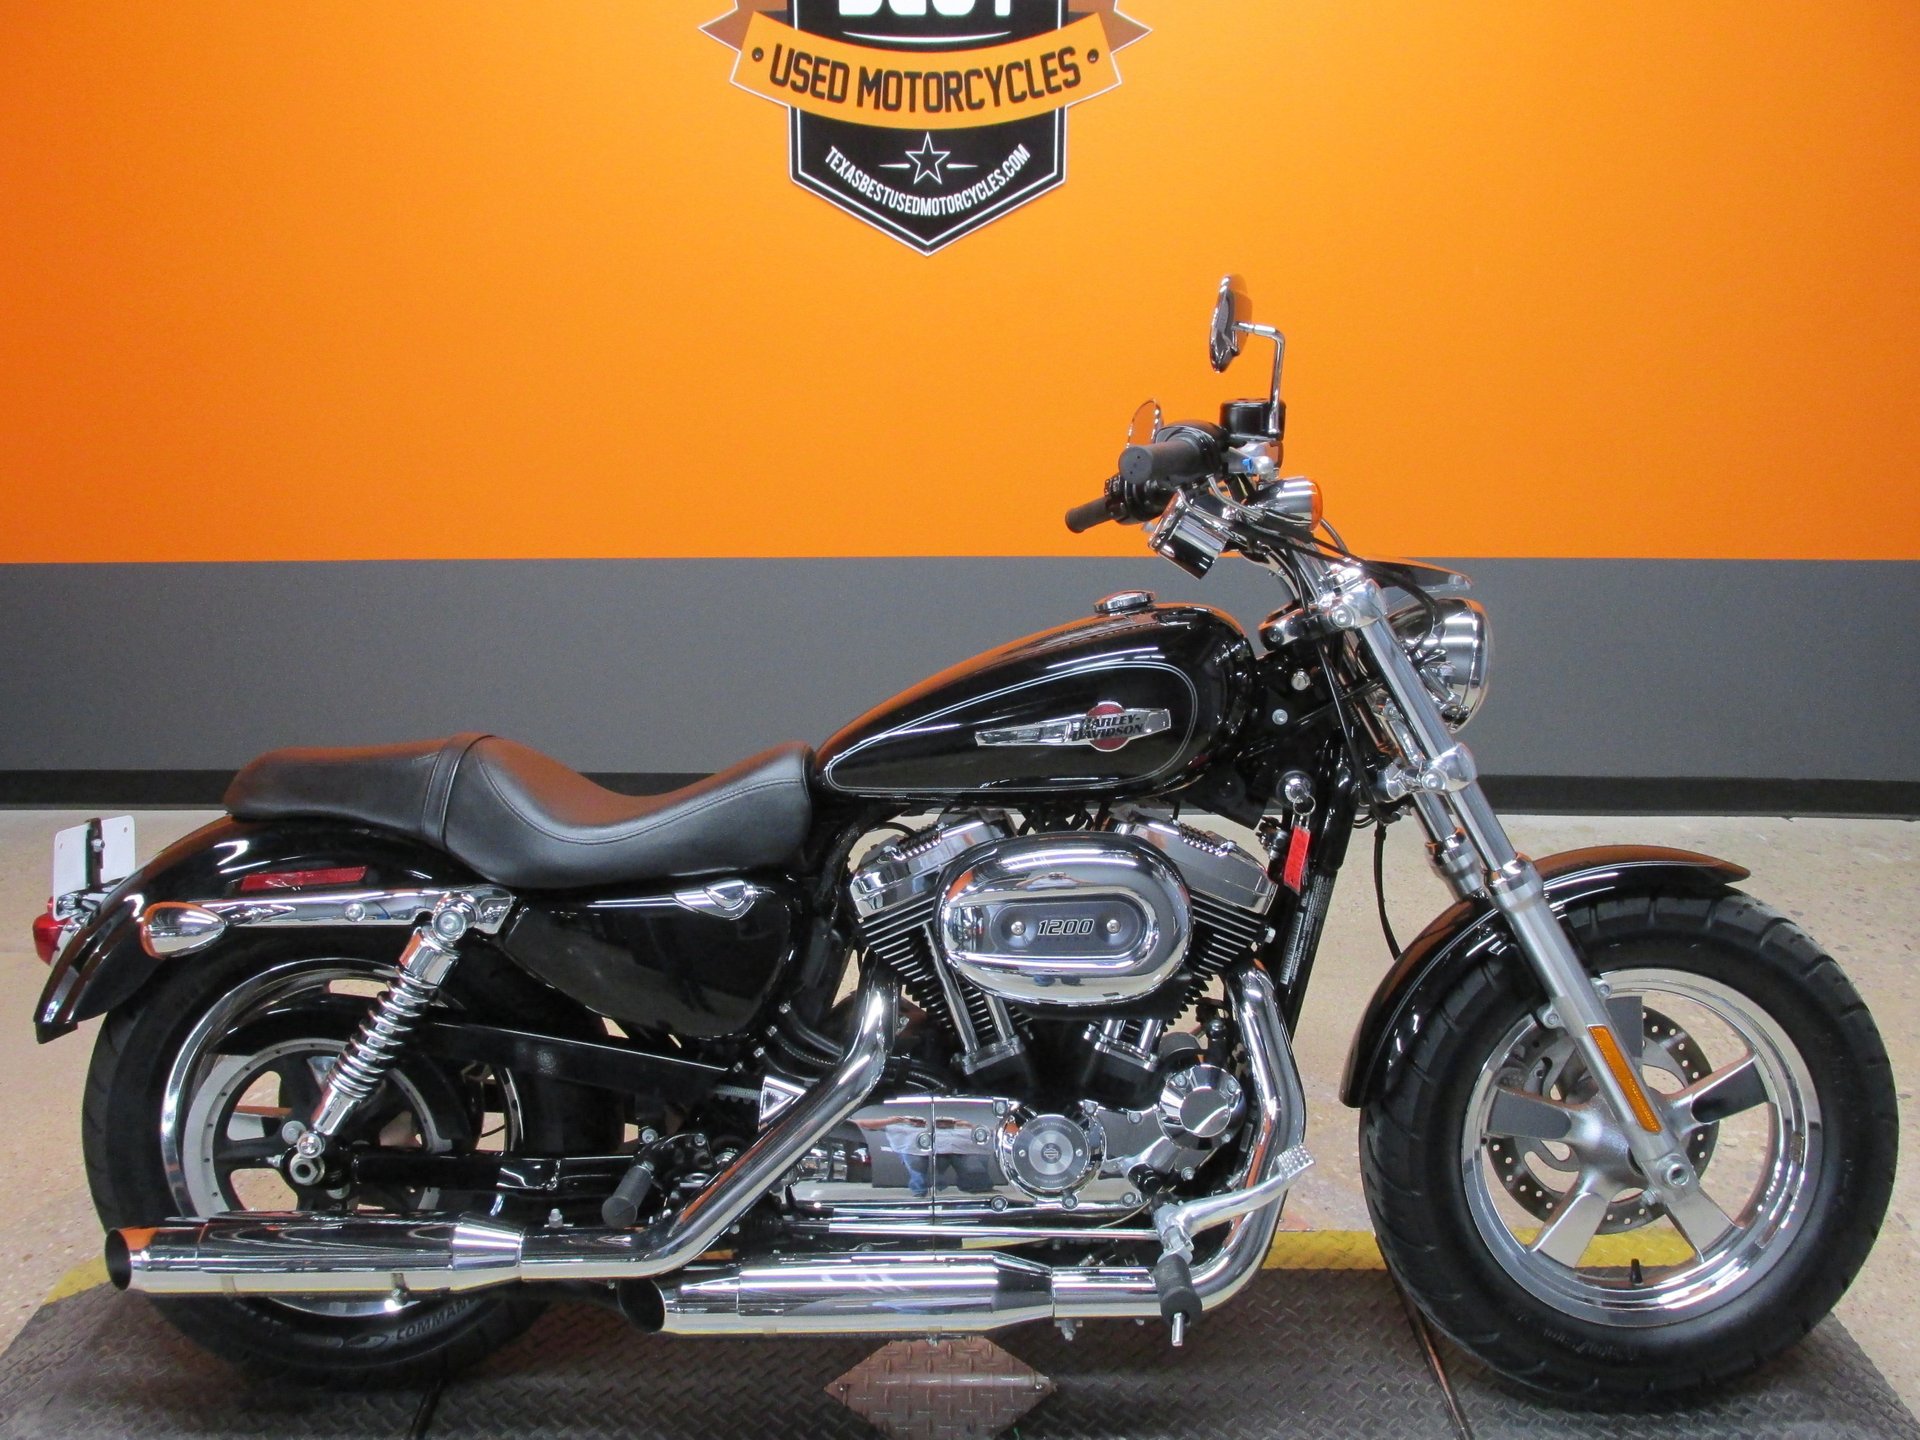 2015 Harley-Davidson Sportster 1200  American Motorcycle Trading Company -  Used Harley Davidson Motorcycles